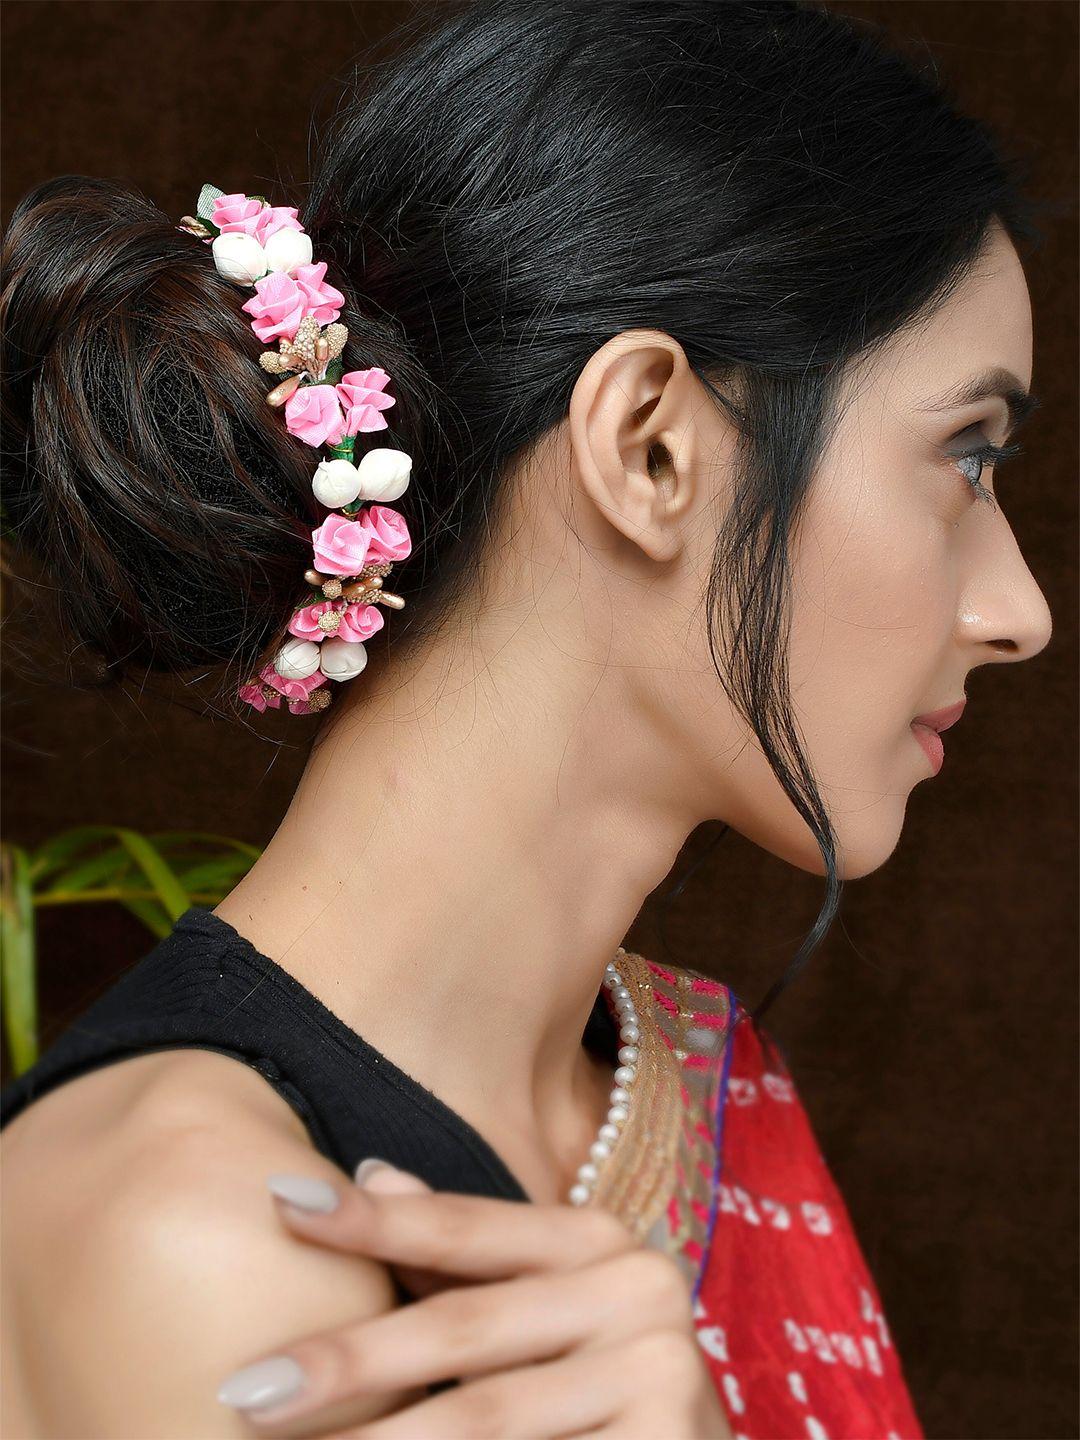 silvermerc designs women pink & white embellished hair accessory set